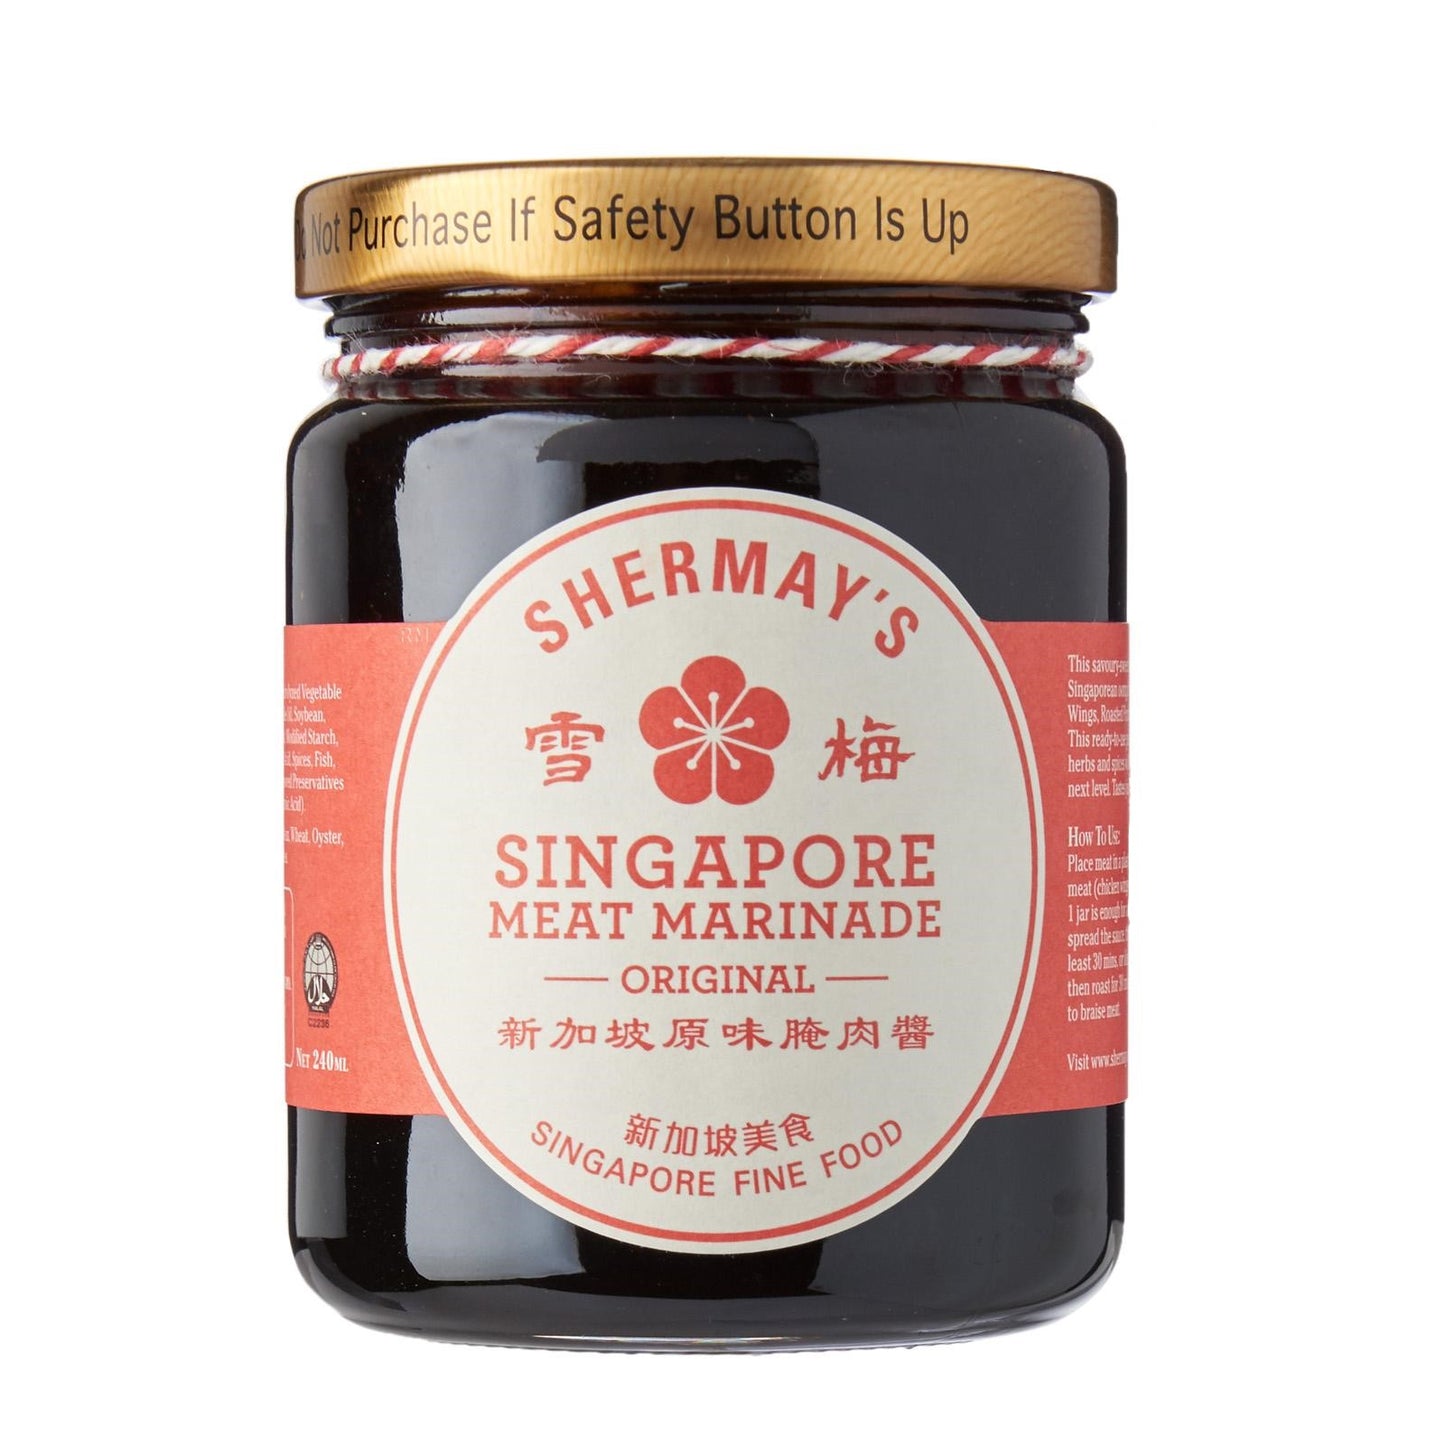 Singapore Meat Marinade Original